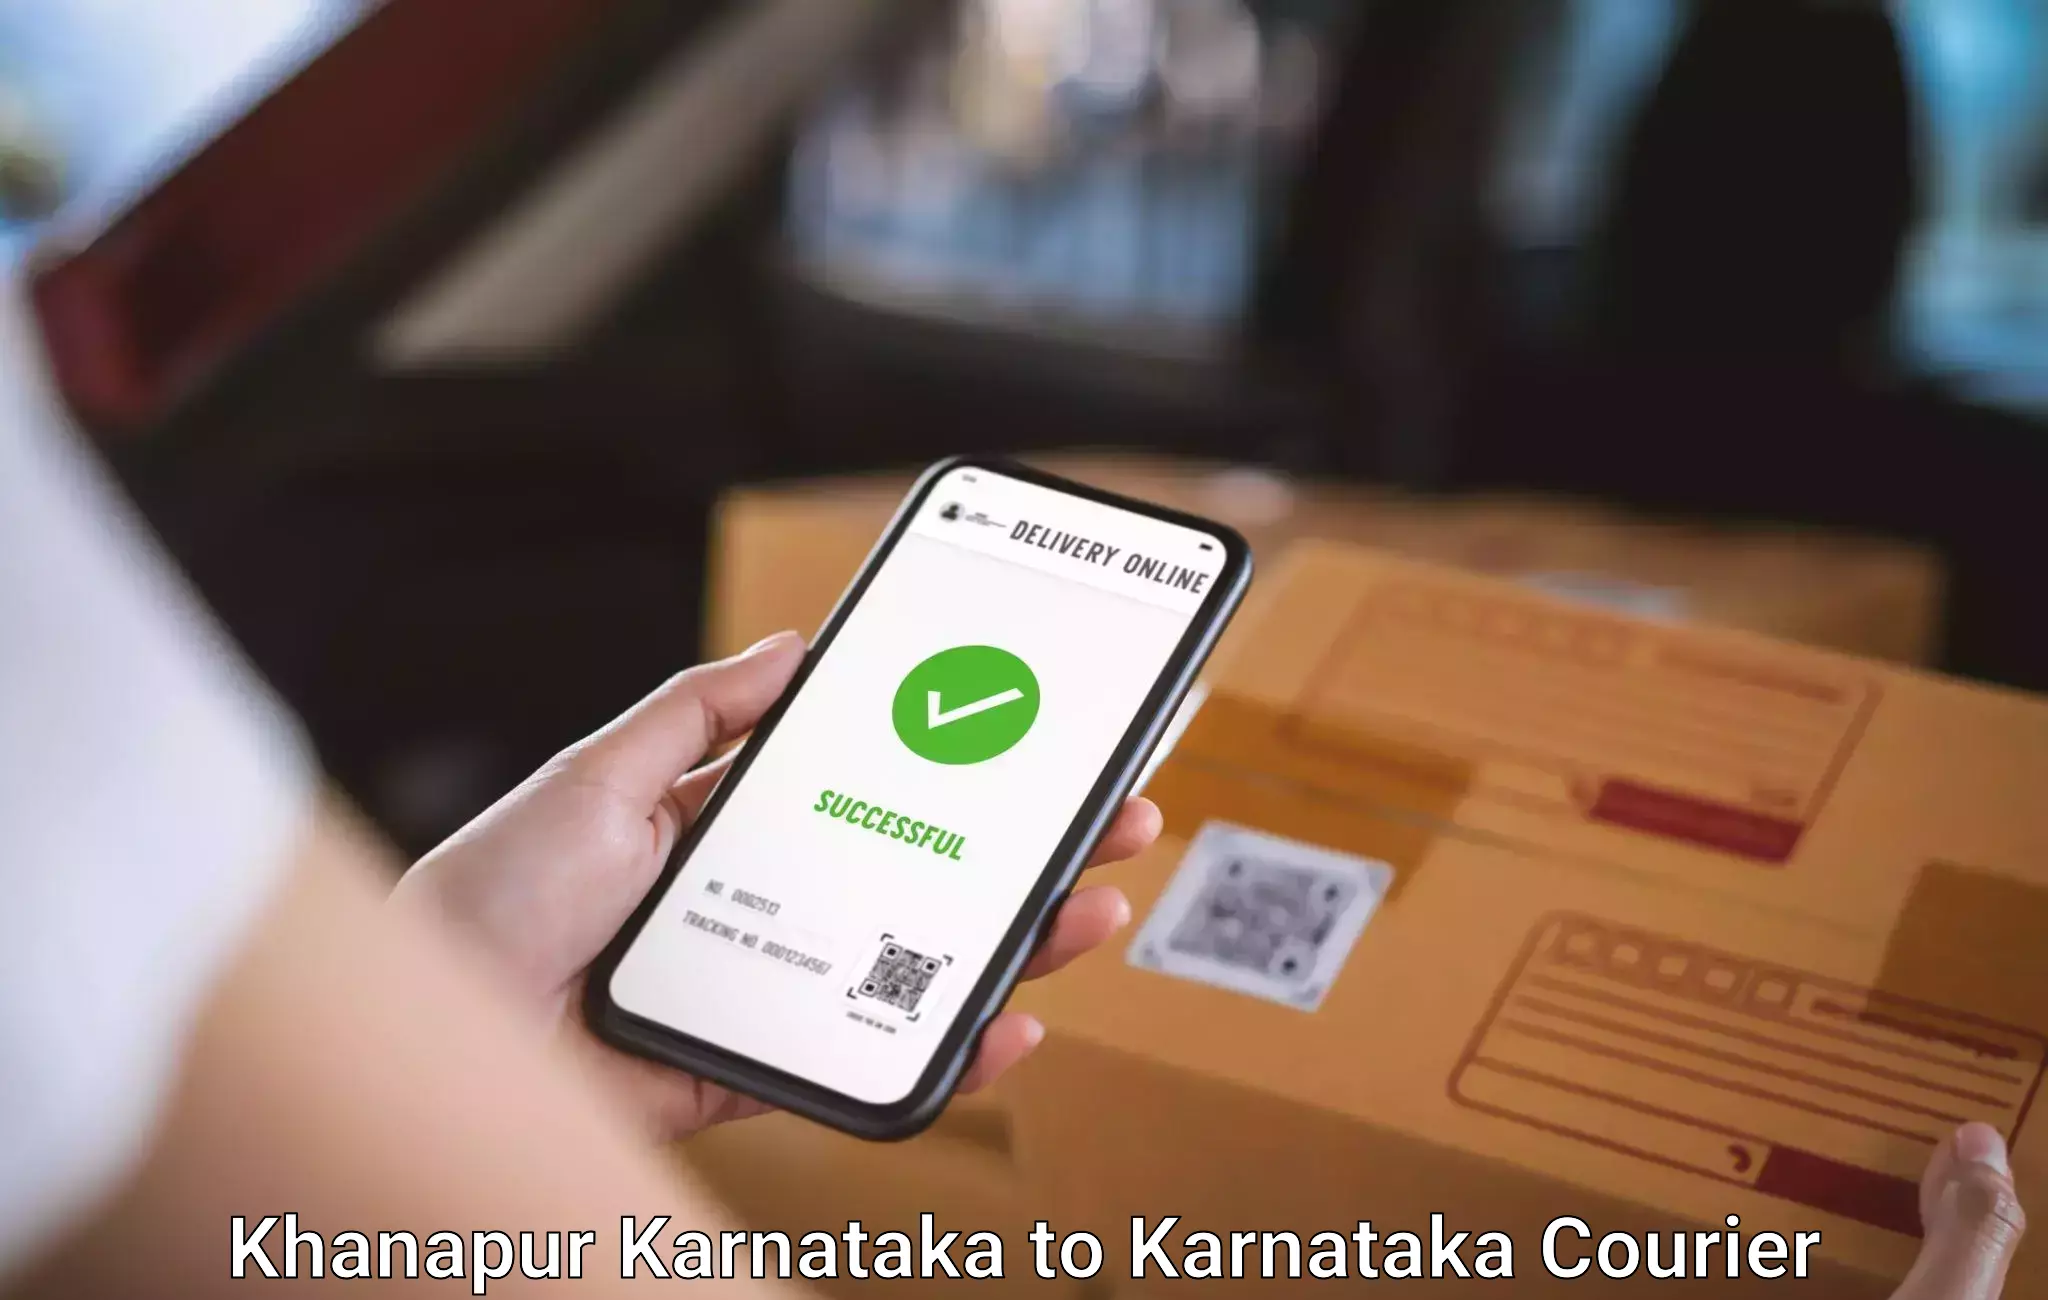 Baggage transport professionals Khanapur Karnataka to Gundlupete